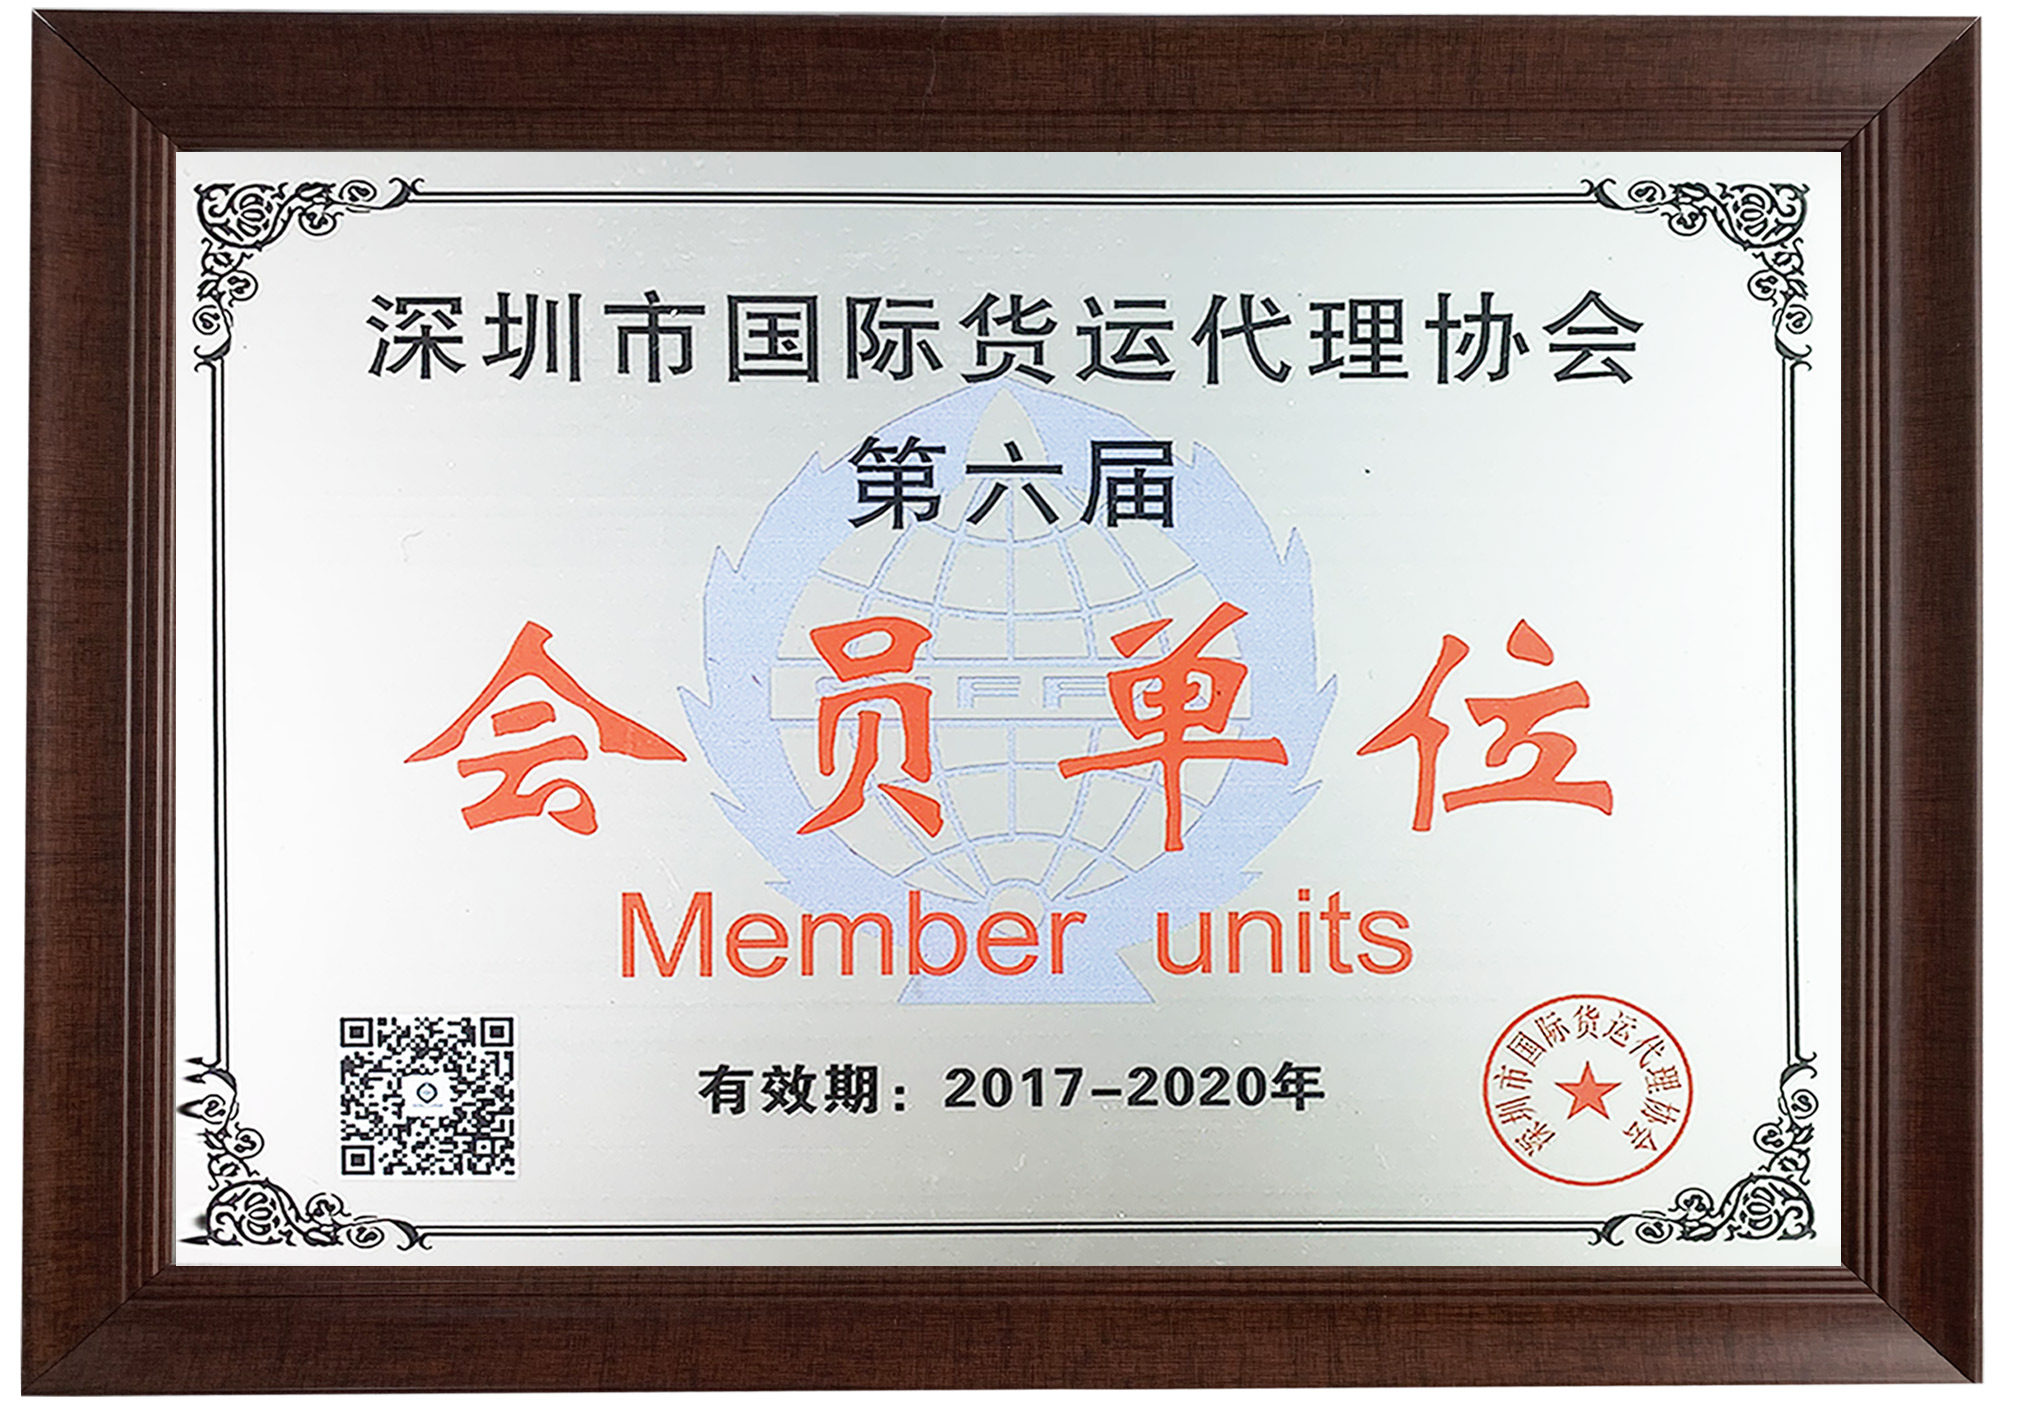 Member units